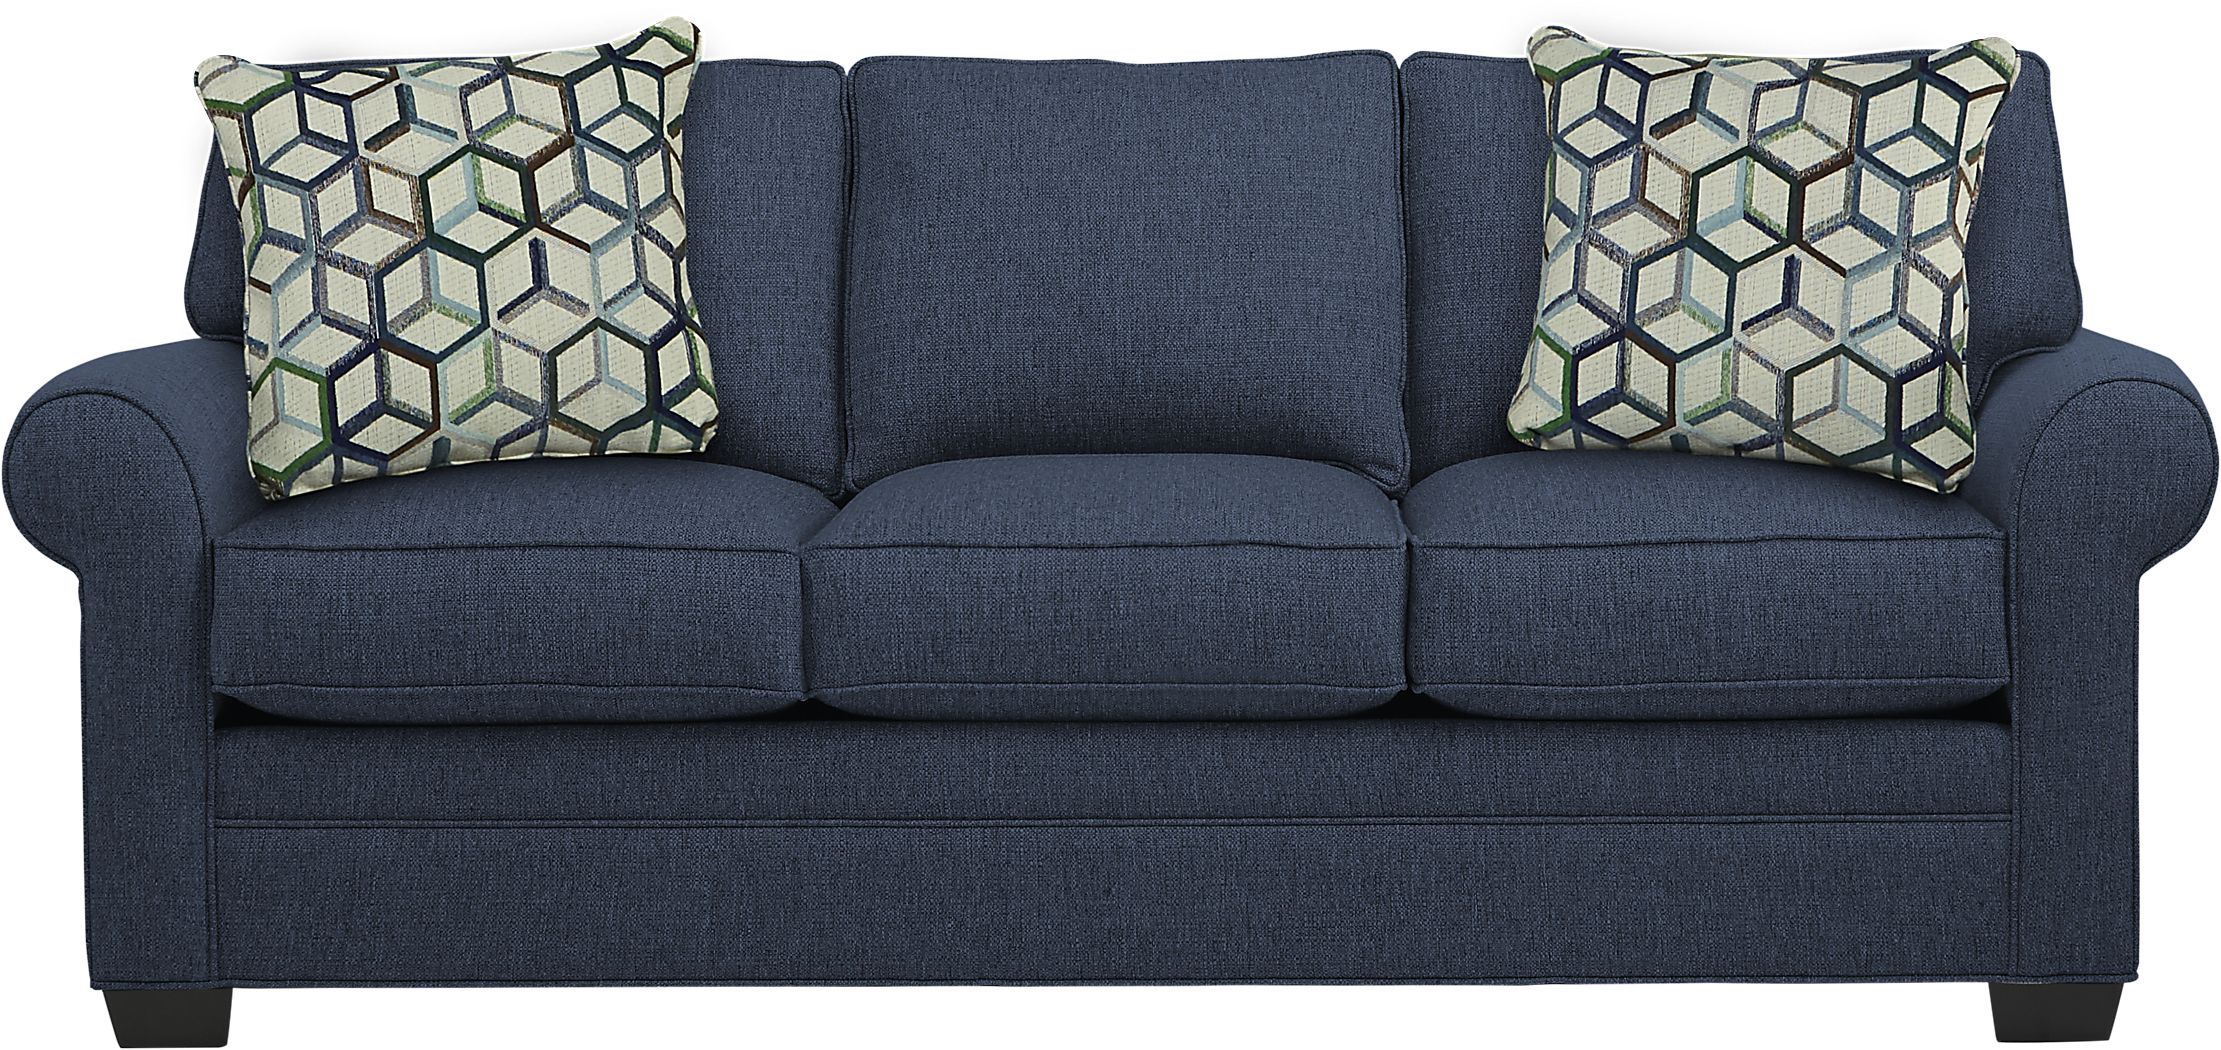 Cindy Crawford Home Bellingham Midnight Textured Sofa